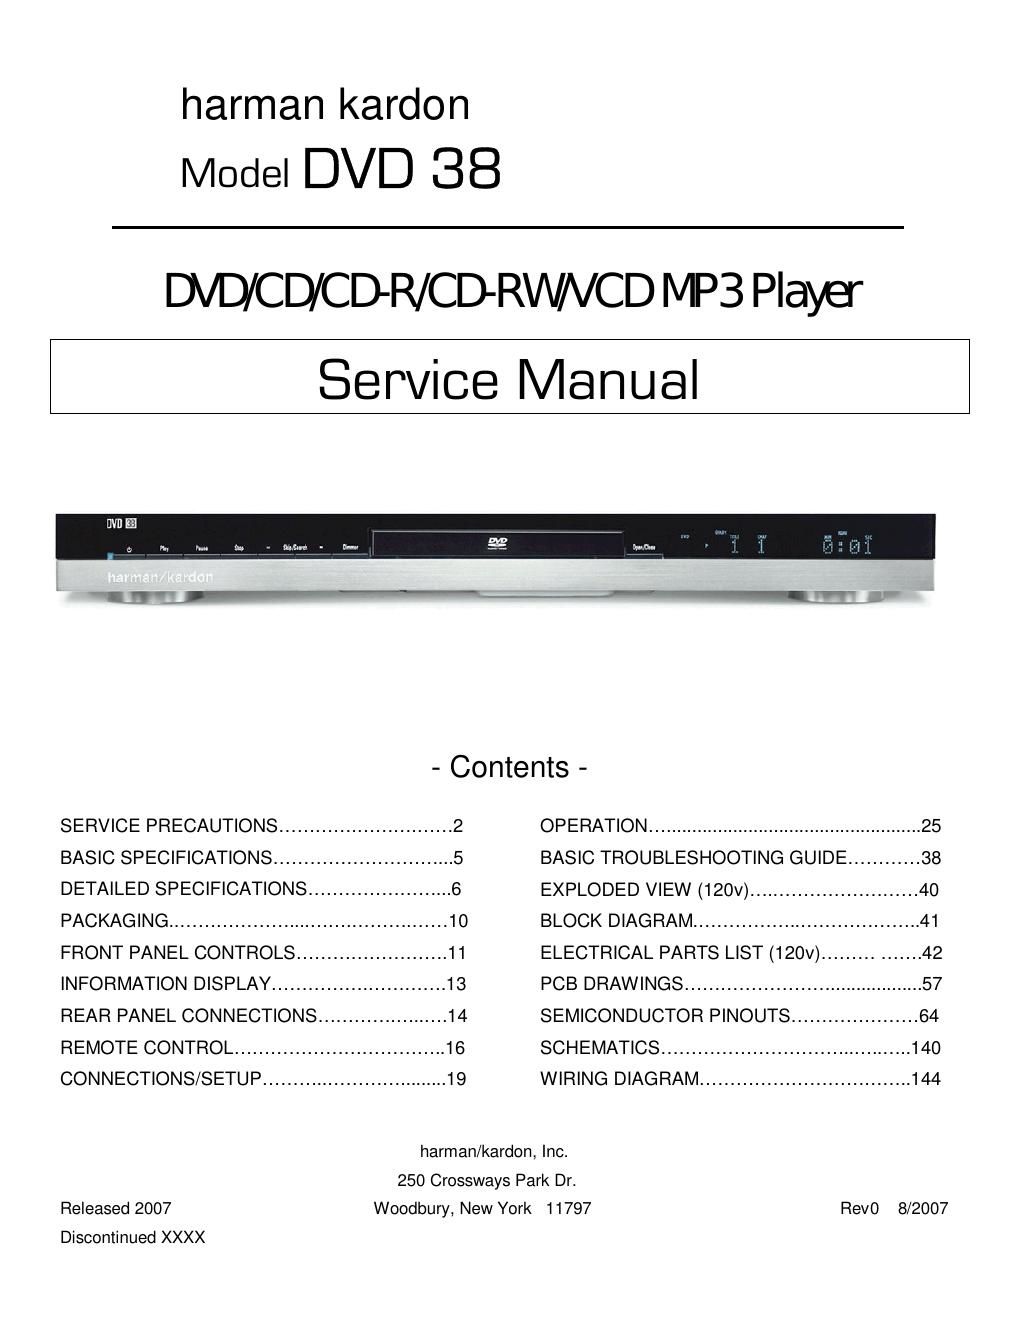 harman kardon dvd 38 service manual